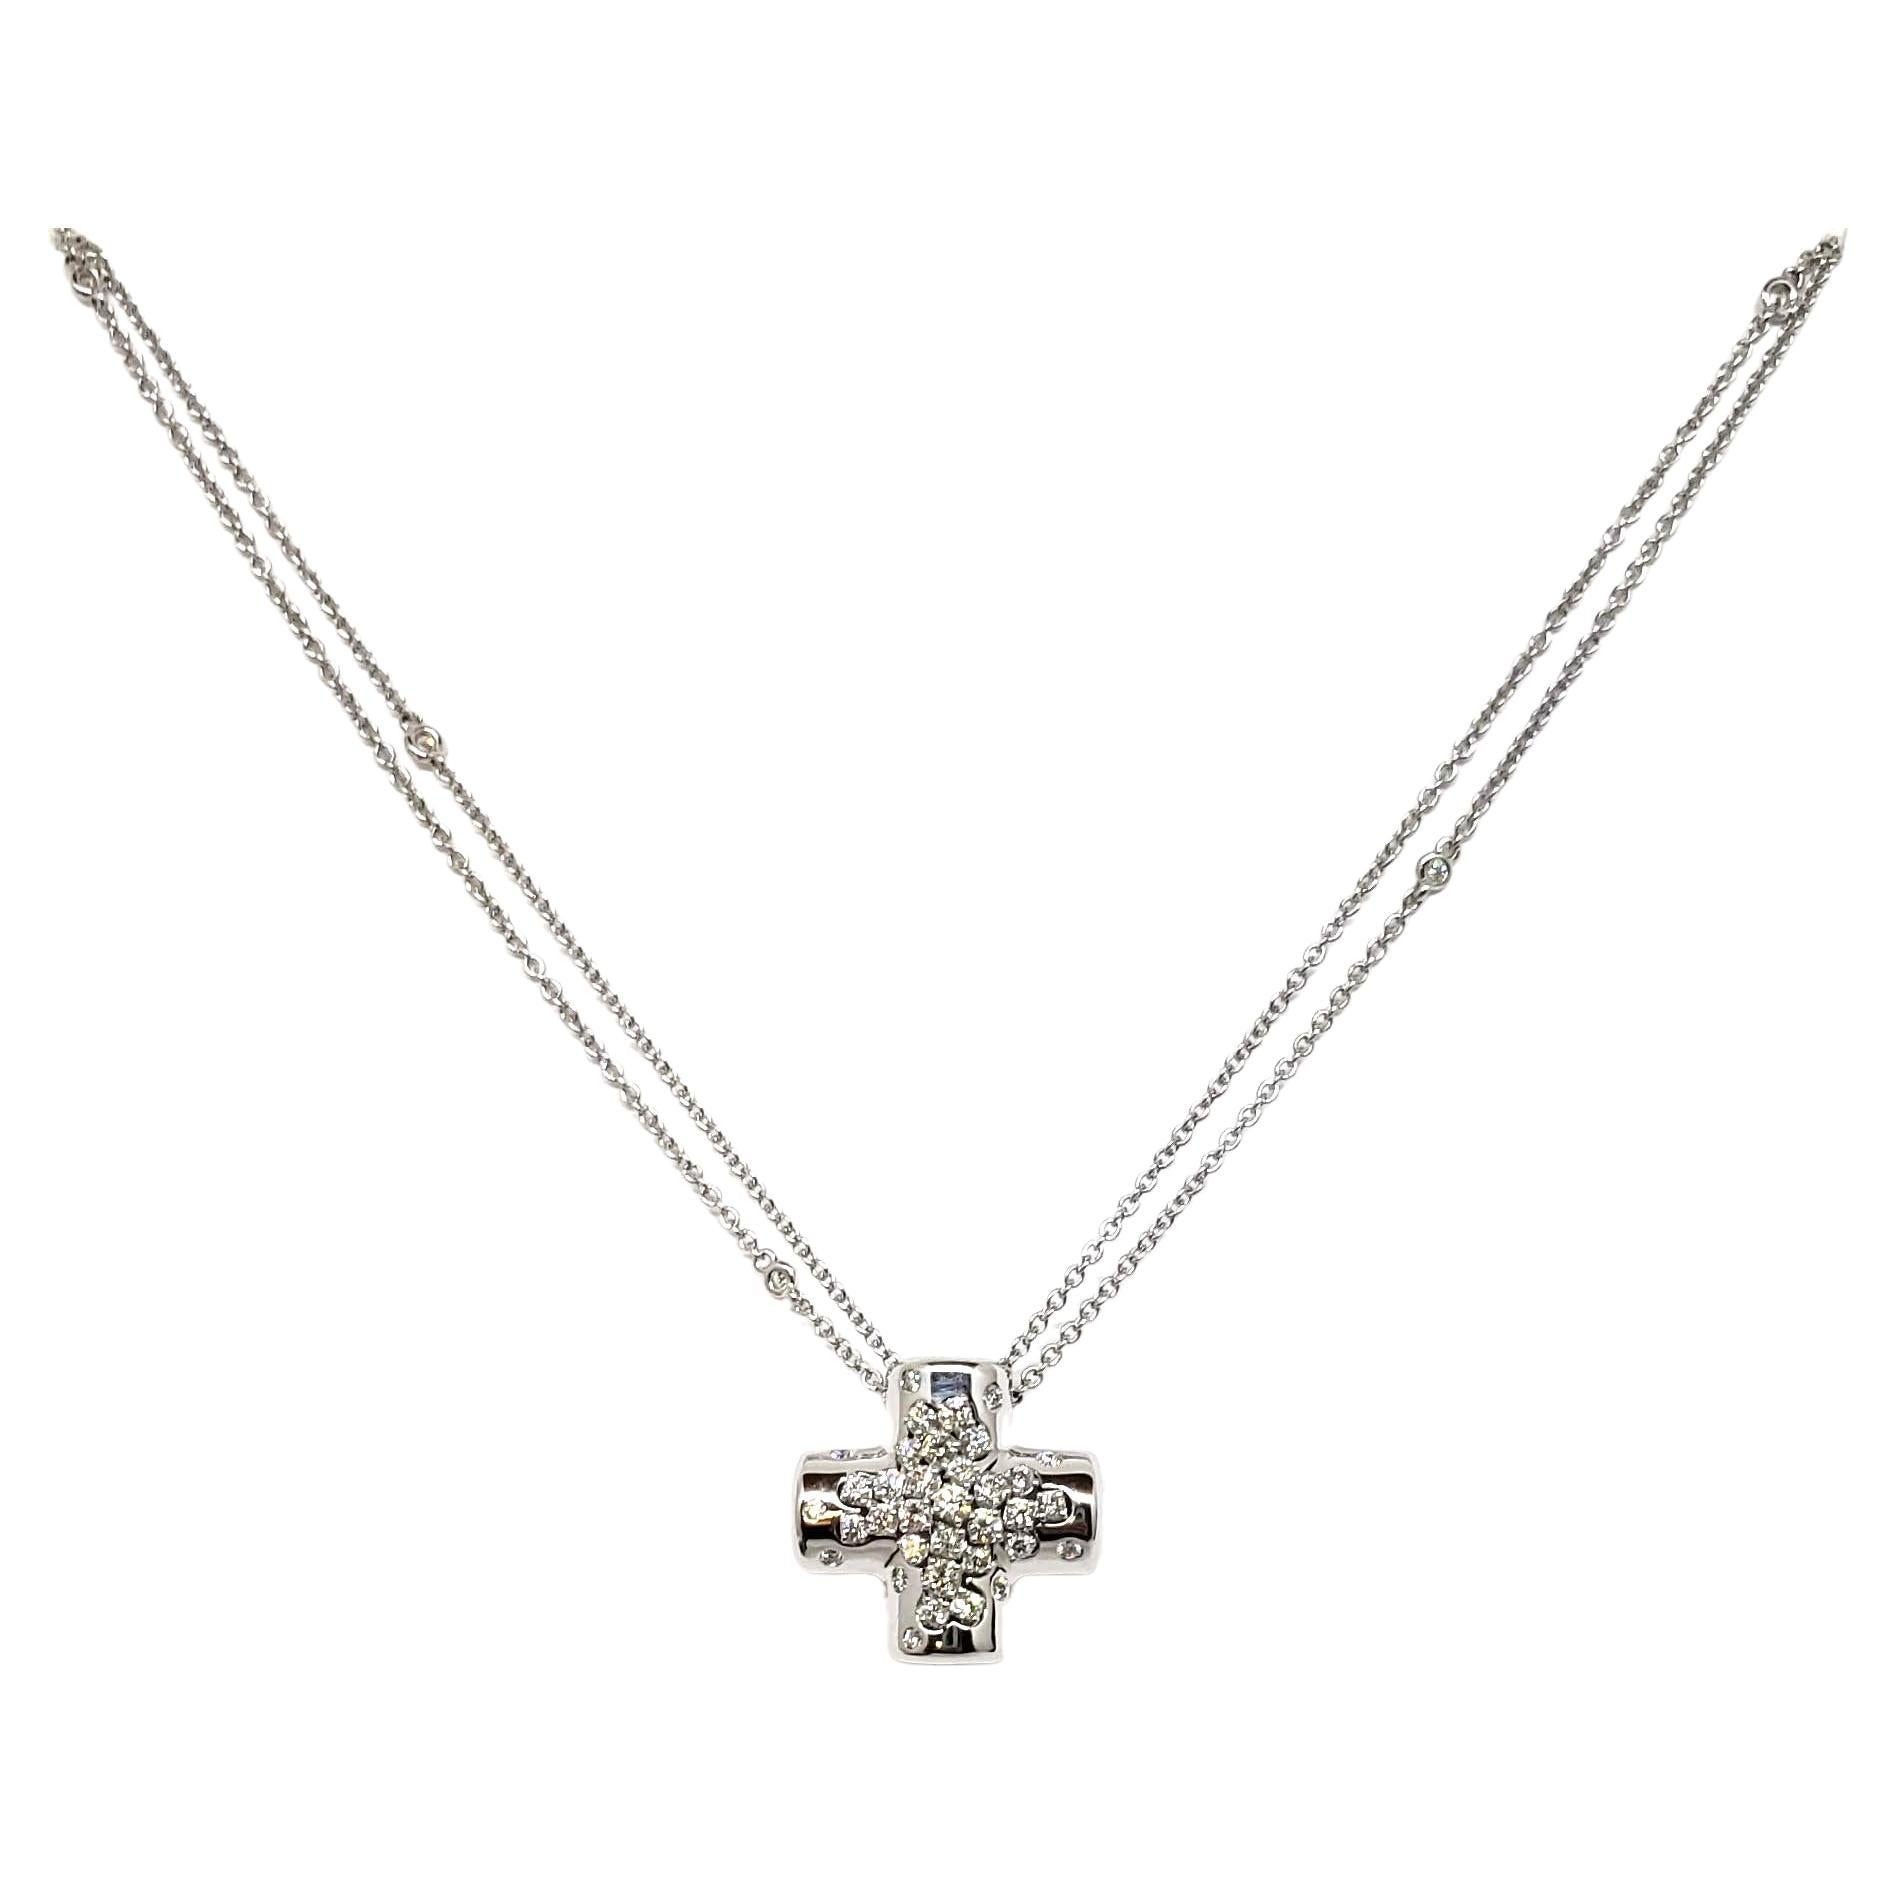 Damiani Paradise Collection Cross Pendant, 18k White Gold & Diamonds, 20042014